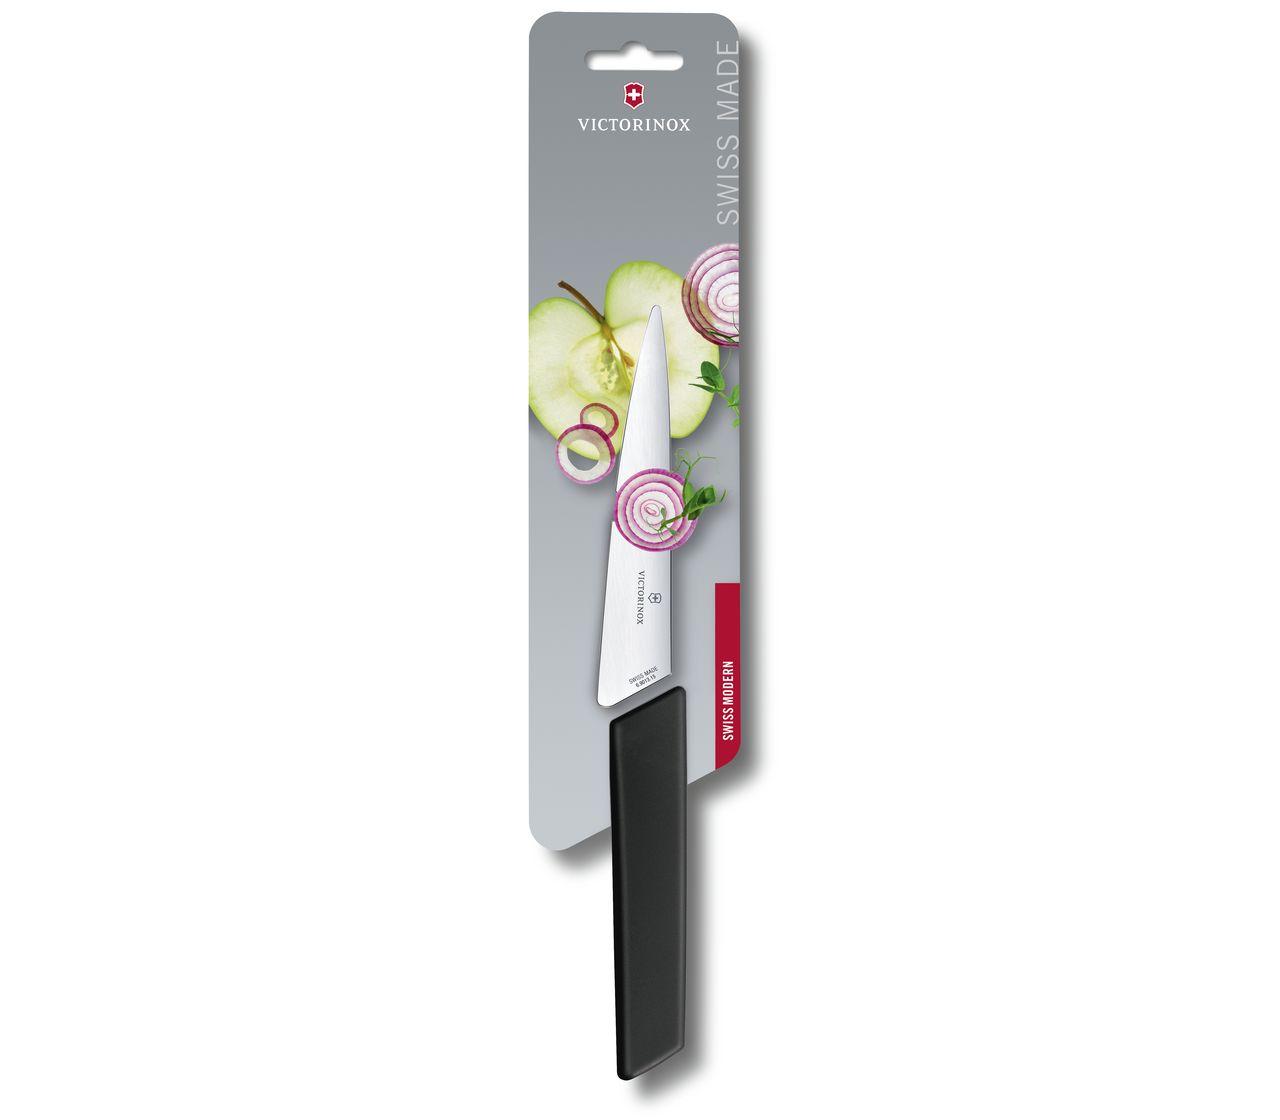 Swiss Modern Chef's Knife-6.9013.15B